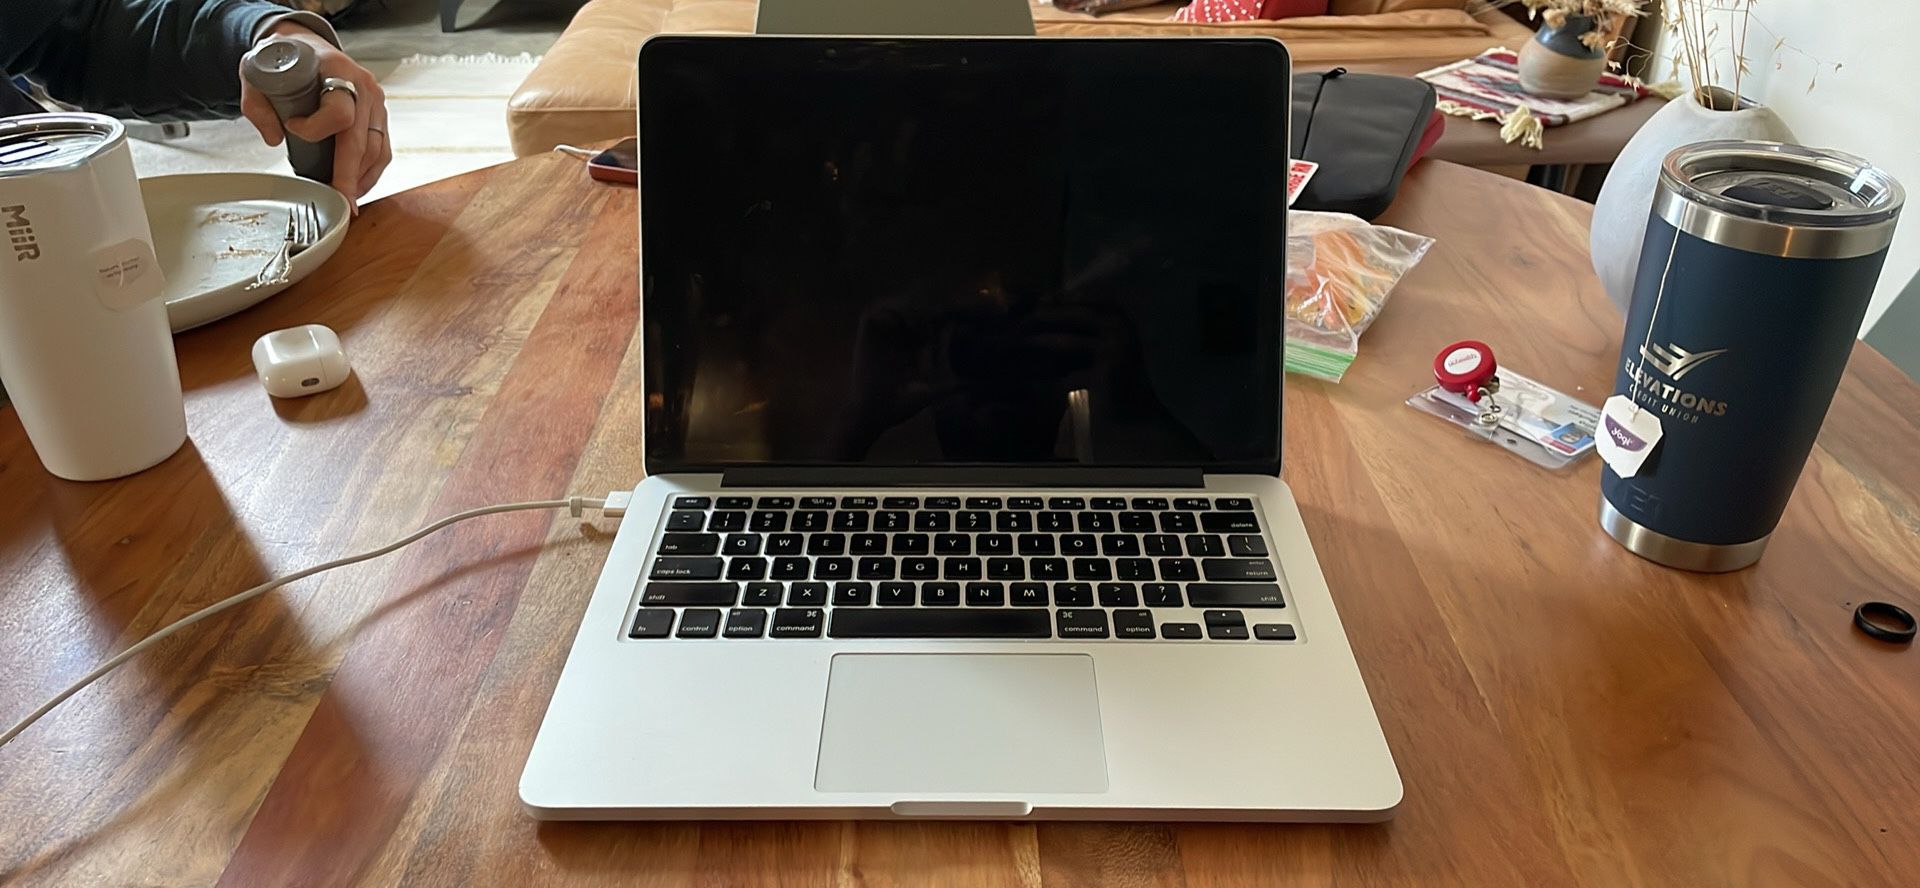 MacBook Pro 13 Inch - Late 2013